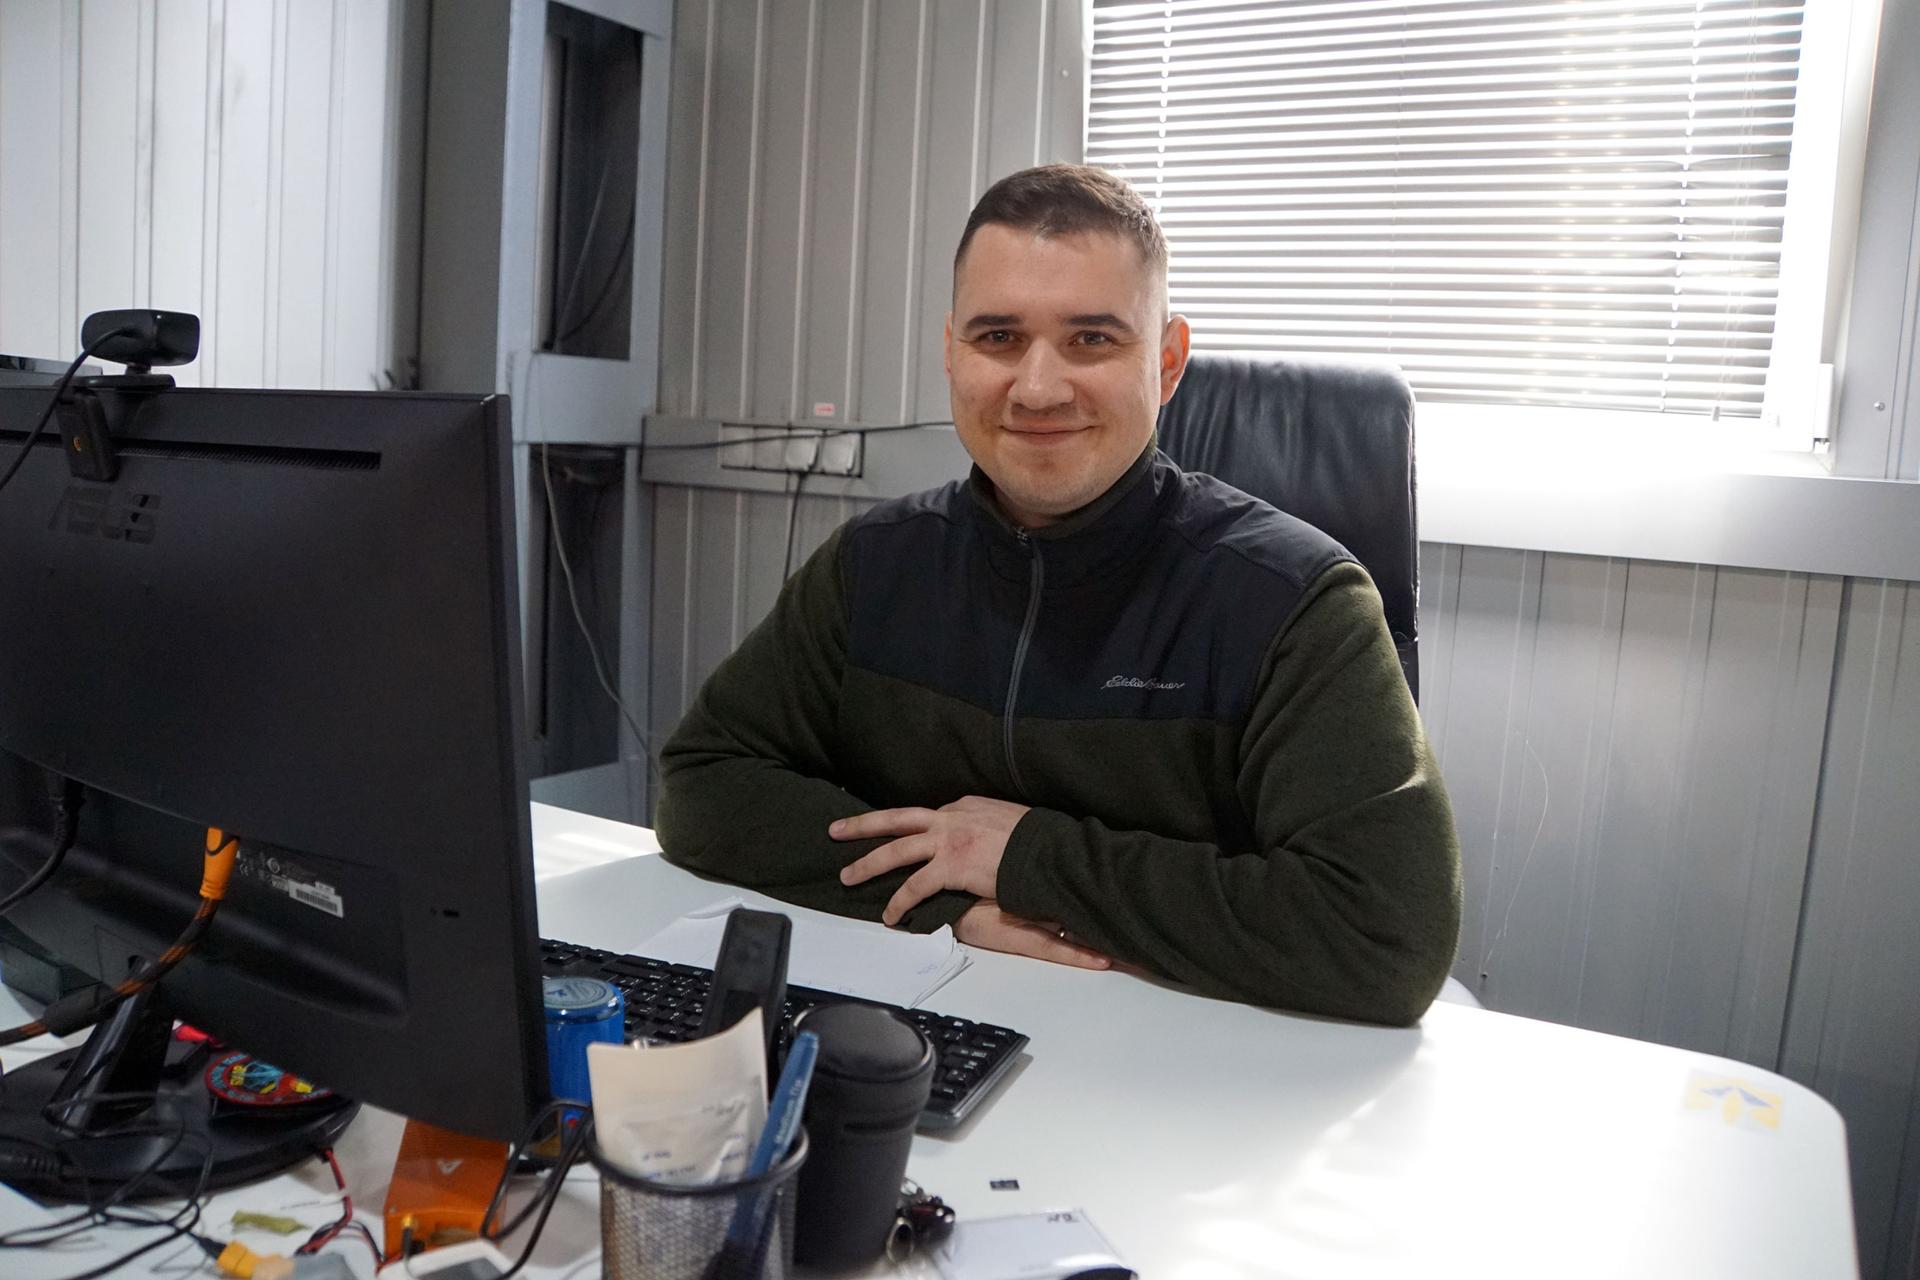 Vitaly Kolesnichenko 是 Airlogix 的首席执行官兼创始人。 